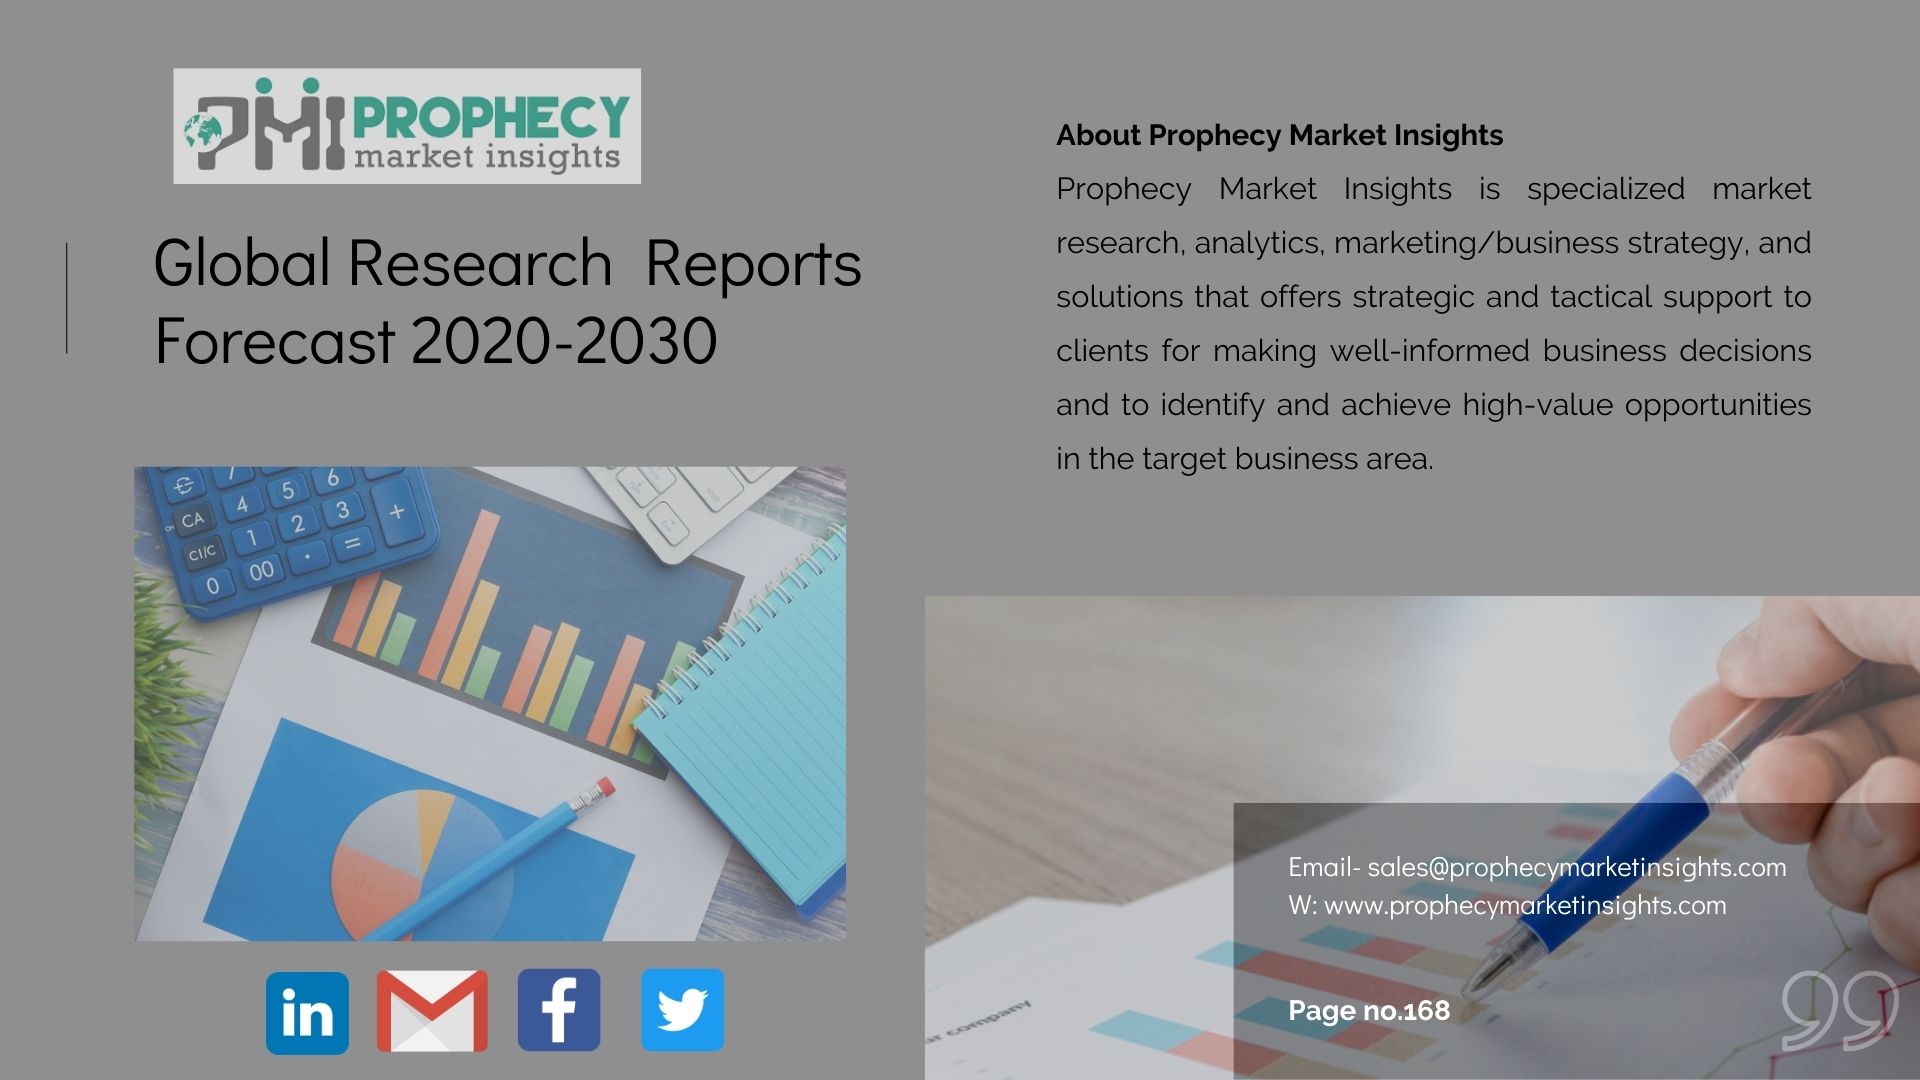 Global Research Reports Forecast 2020-2030-dda6e986